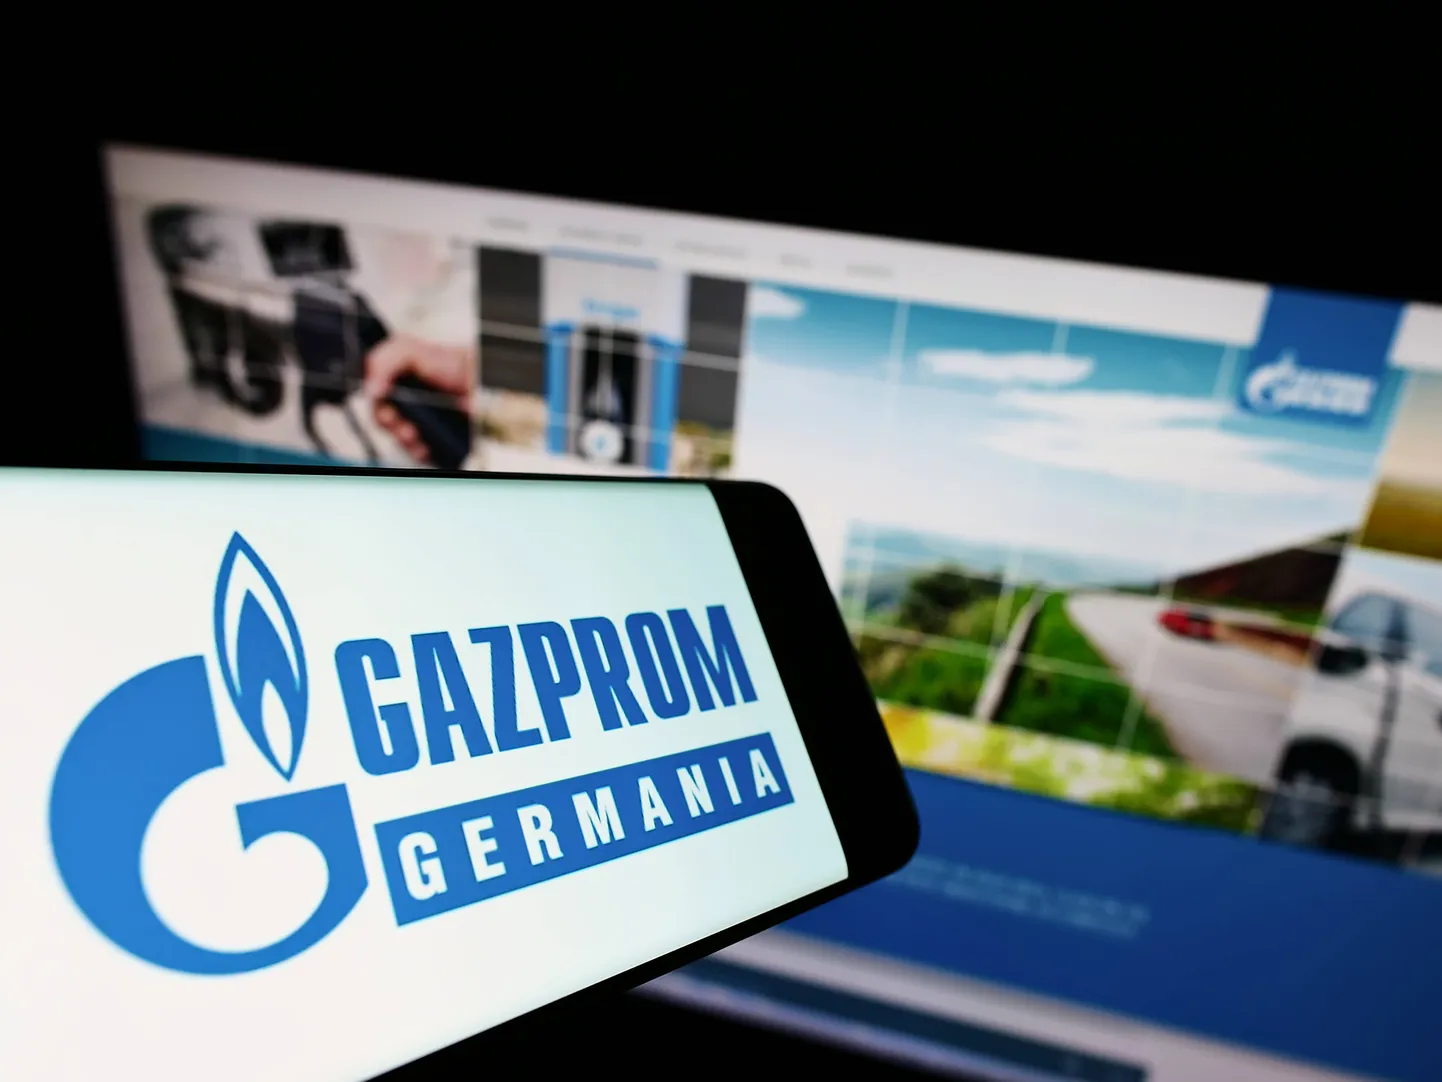 Gazprom Germania GmbH